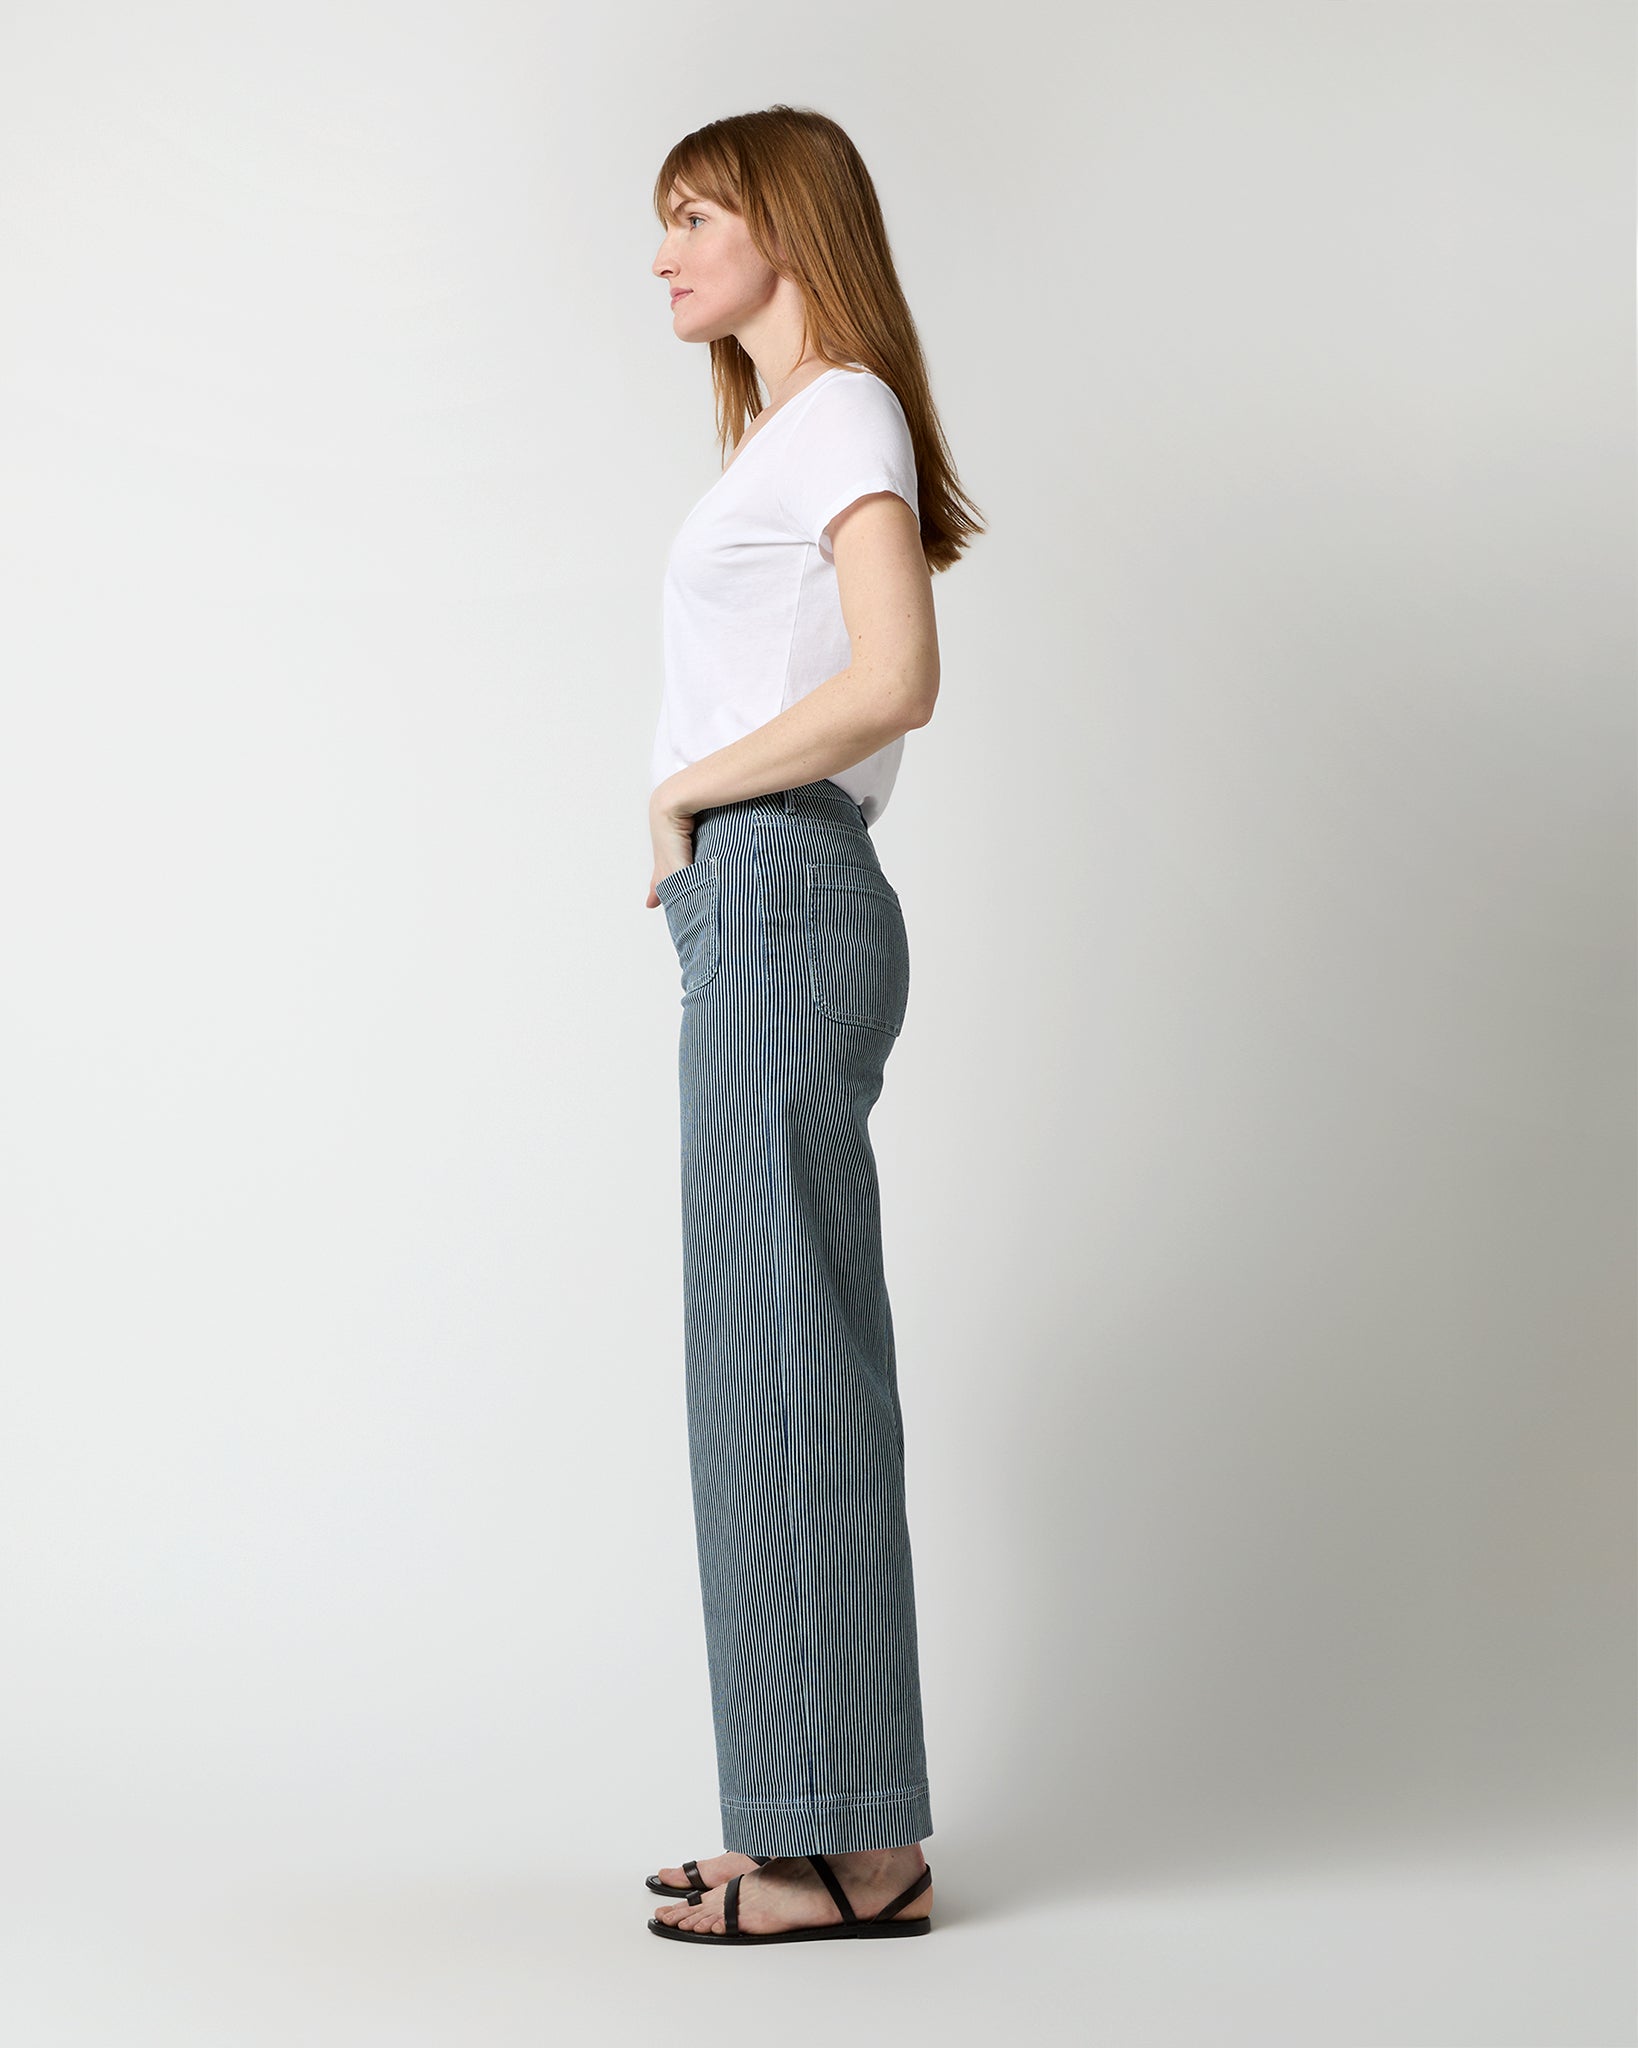 Column Patch Pocket Jean in Dark Indigo Railroad Stripe Stretch Denim